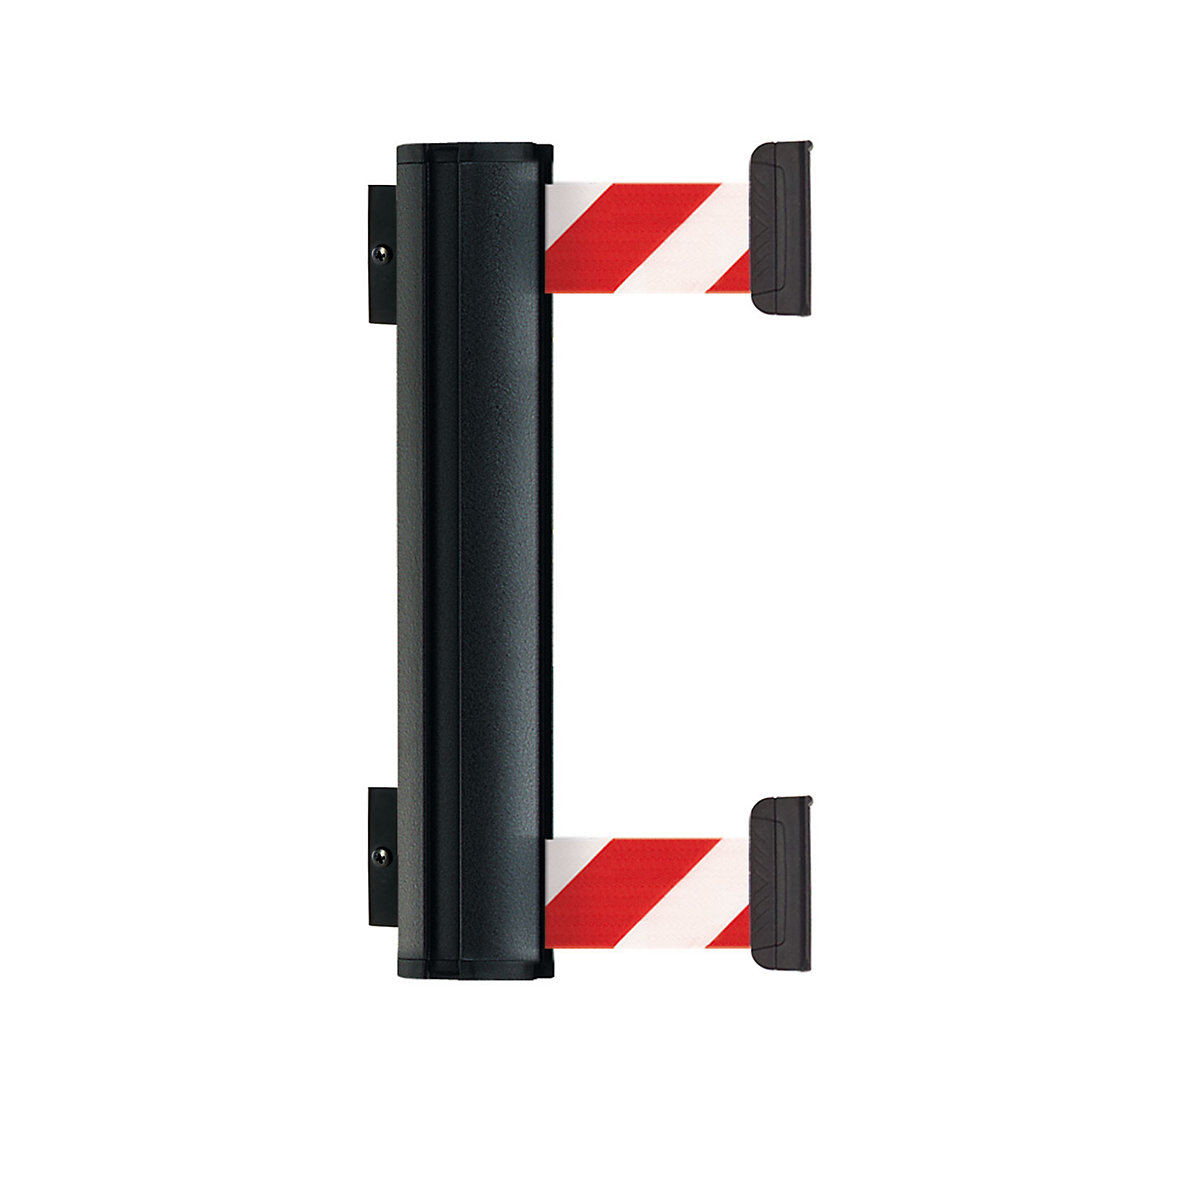 Gurtbandkassette DOUBLE aus Aluminium, Bandauszug max. 3700 mm, Gurtfarbe Rot / Weiß